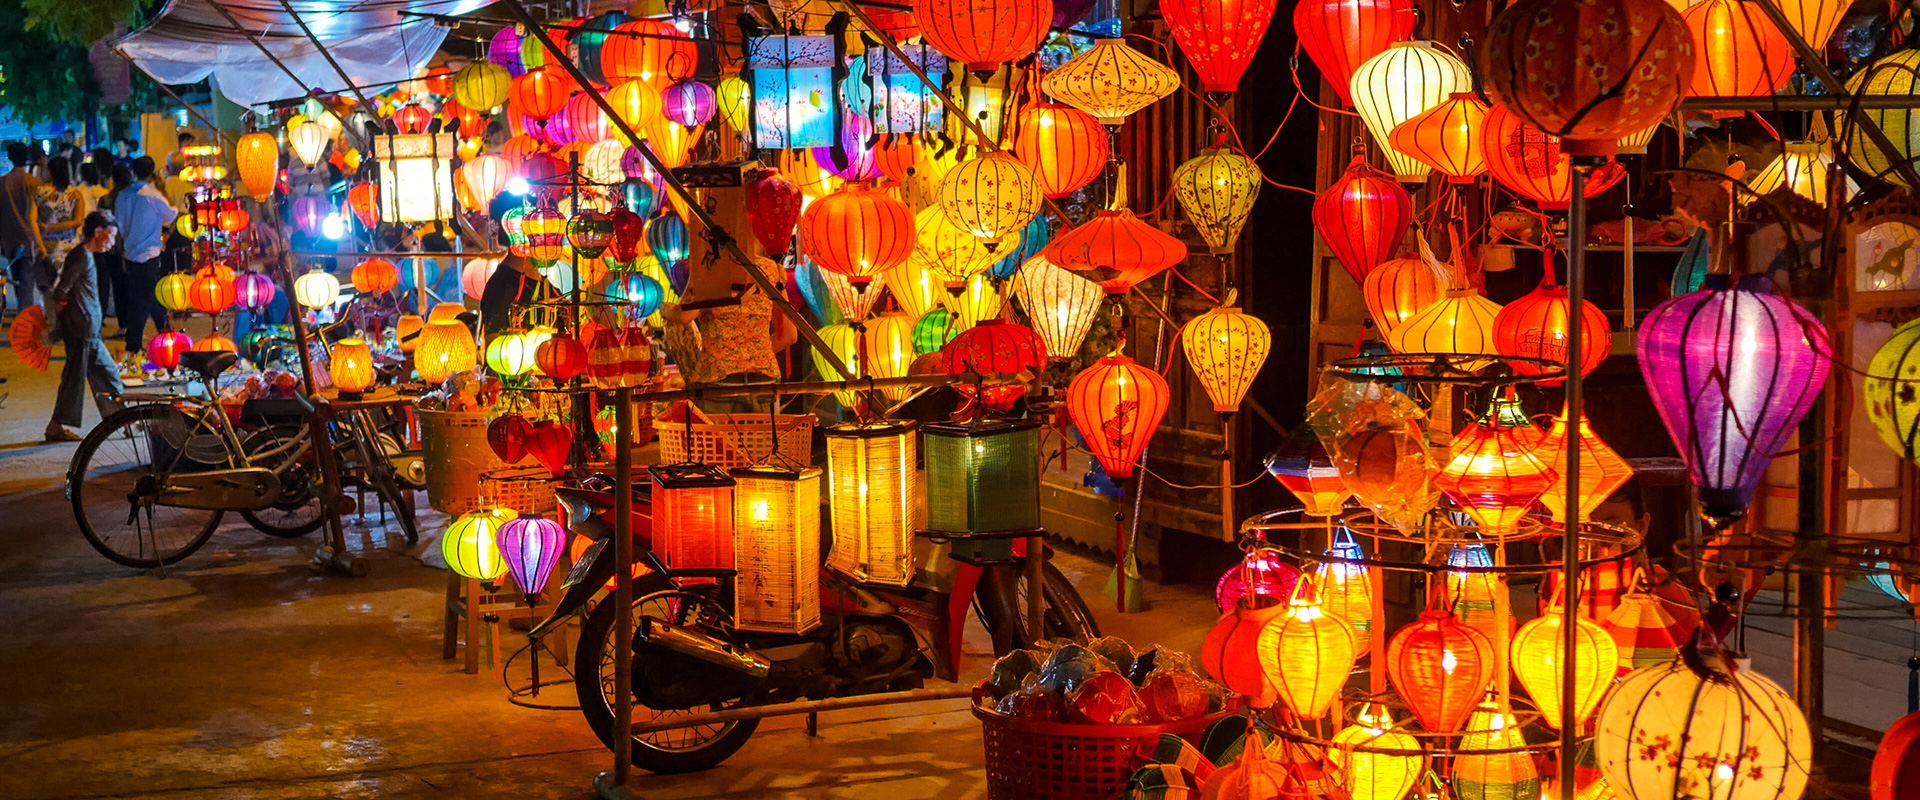 Lanterns a glow in local market, Hoi An, Vietnam